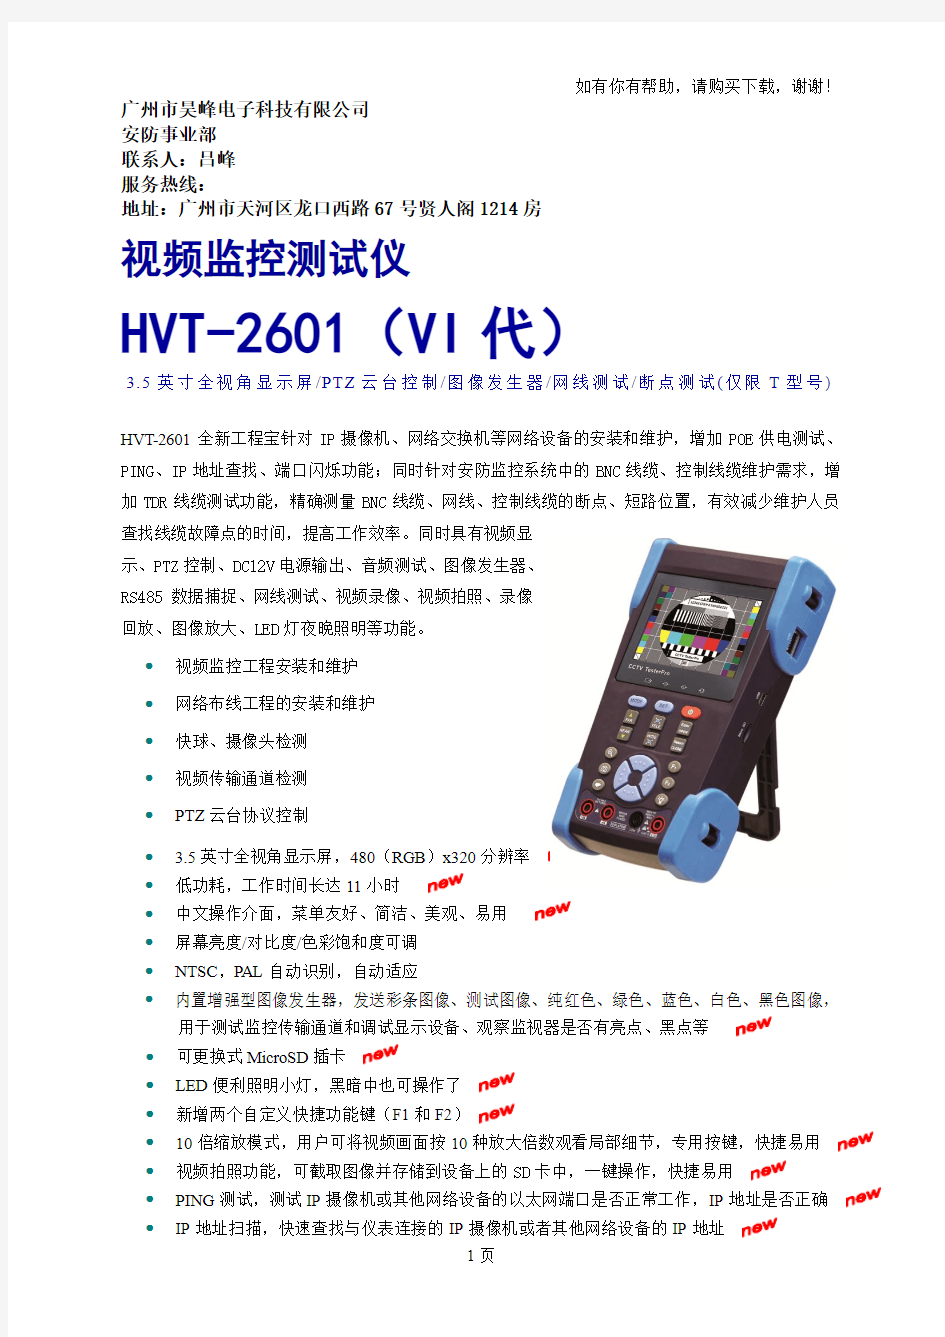 HVT2601工程宝视频监控测试仪第六代技术参数